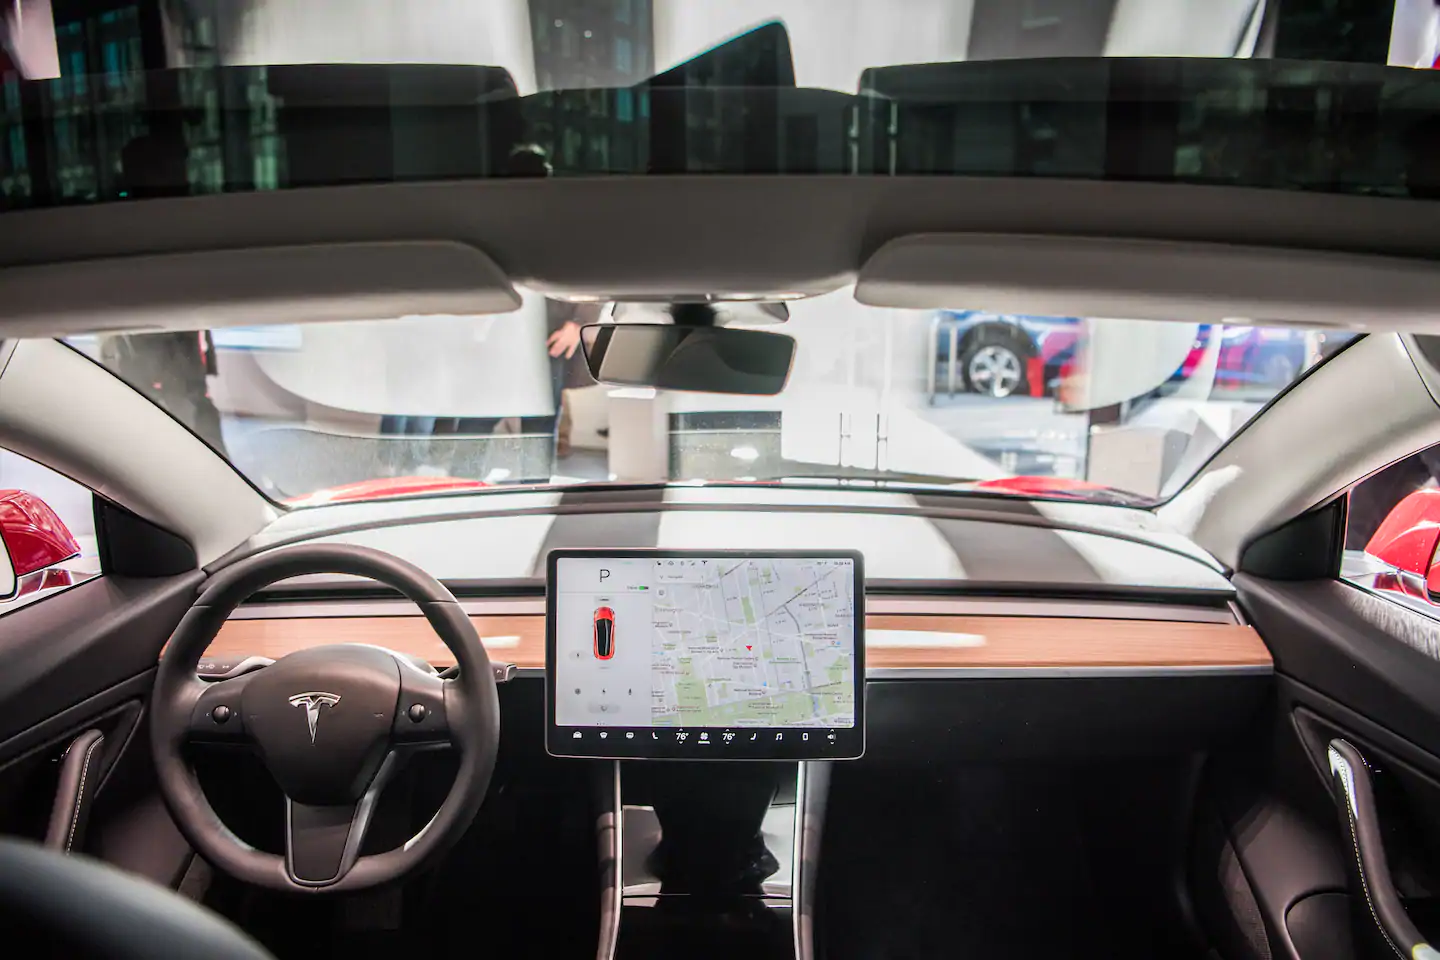 Tesla posts earnings amid Elon Musk promises of ‘Full Self-Driving’